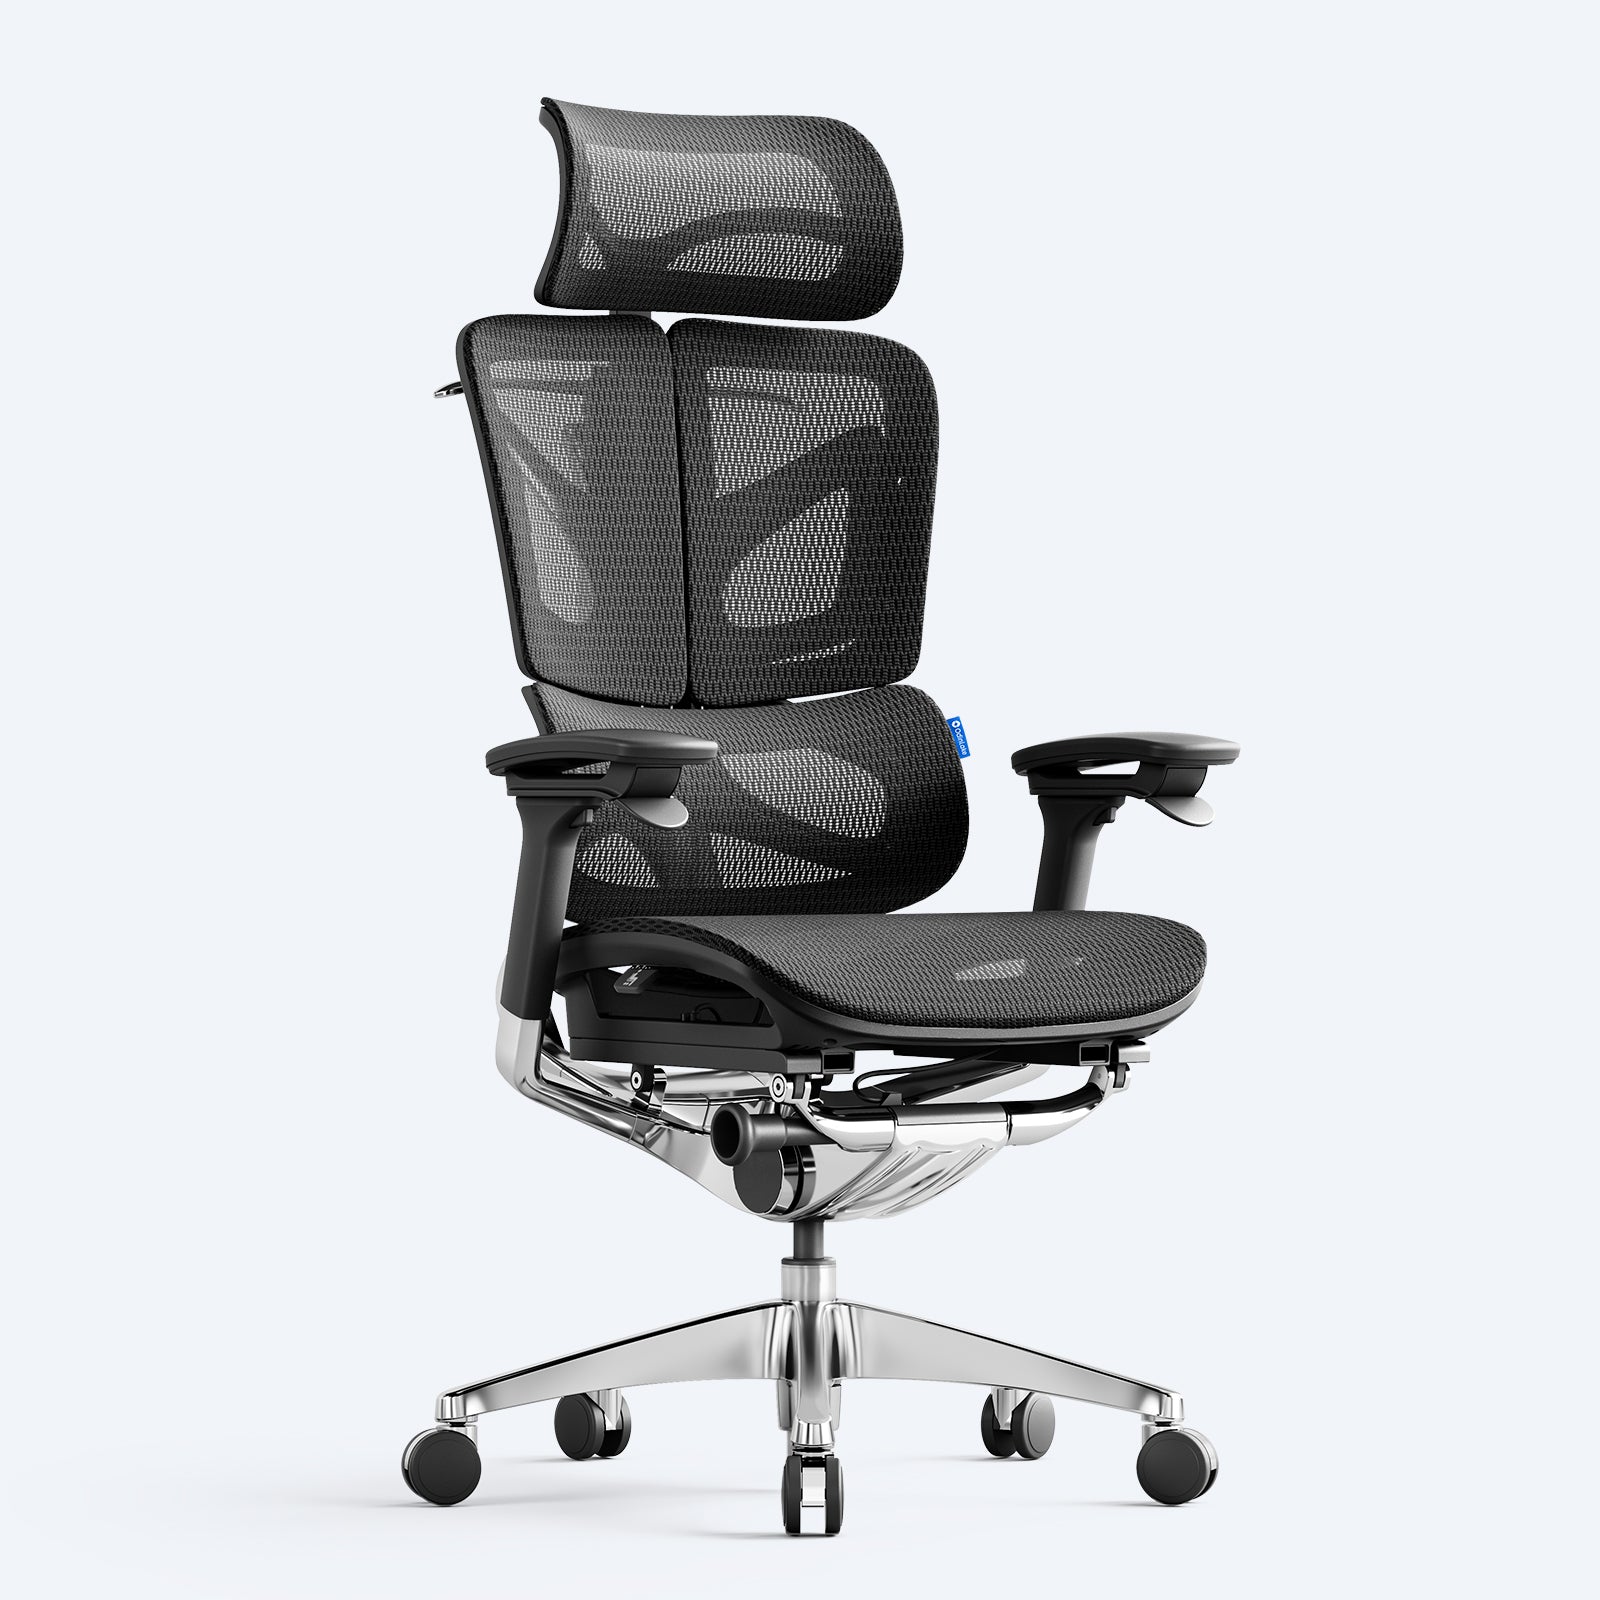 OdinLake Ergonomic Office Chair with Footrest | Ergo Pro 633